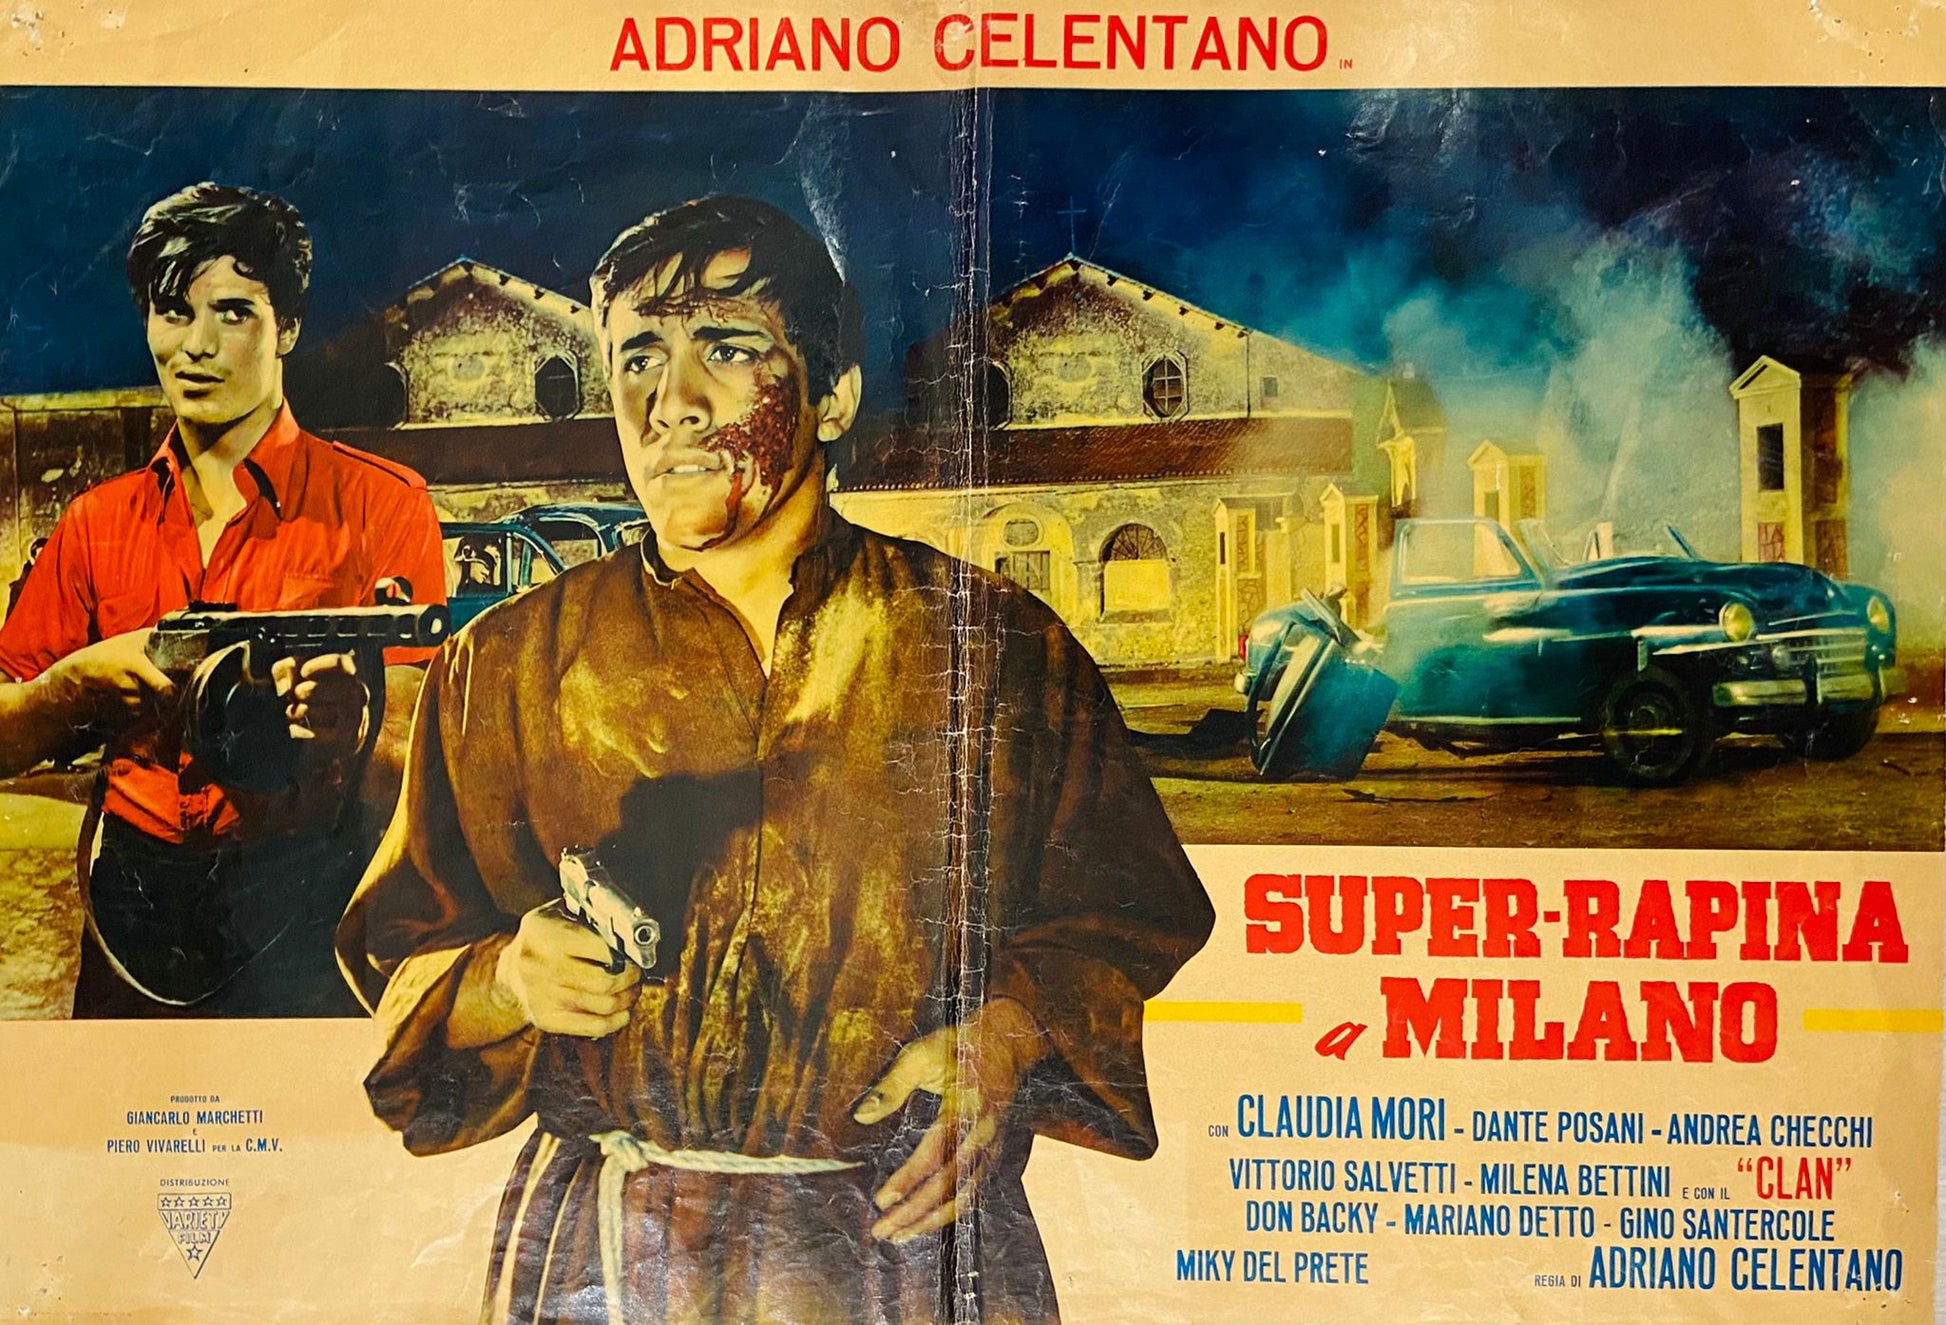 Fotobusta Originale d'Epoca - Super-Rapina a Milano (Adriano Celentano) 1964 Tortona4Arte